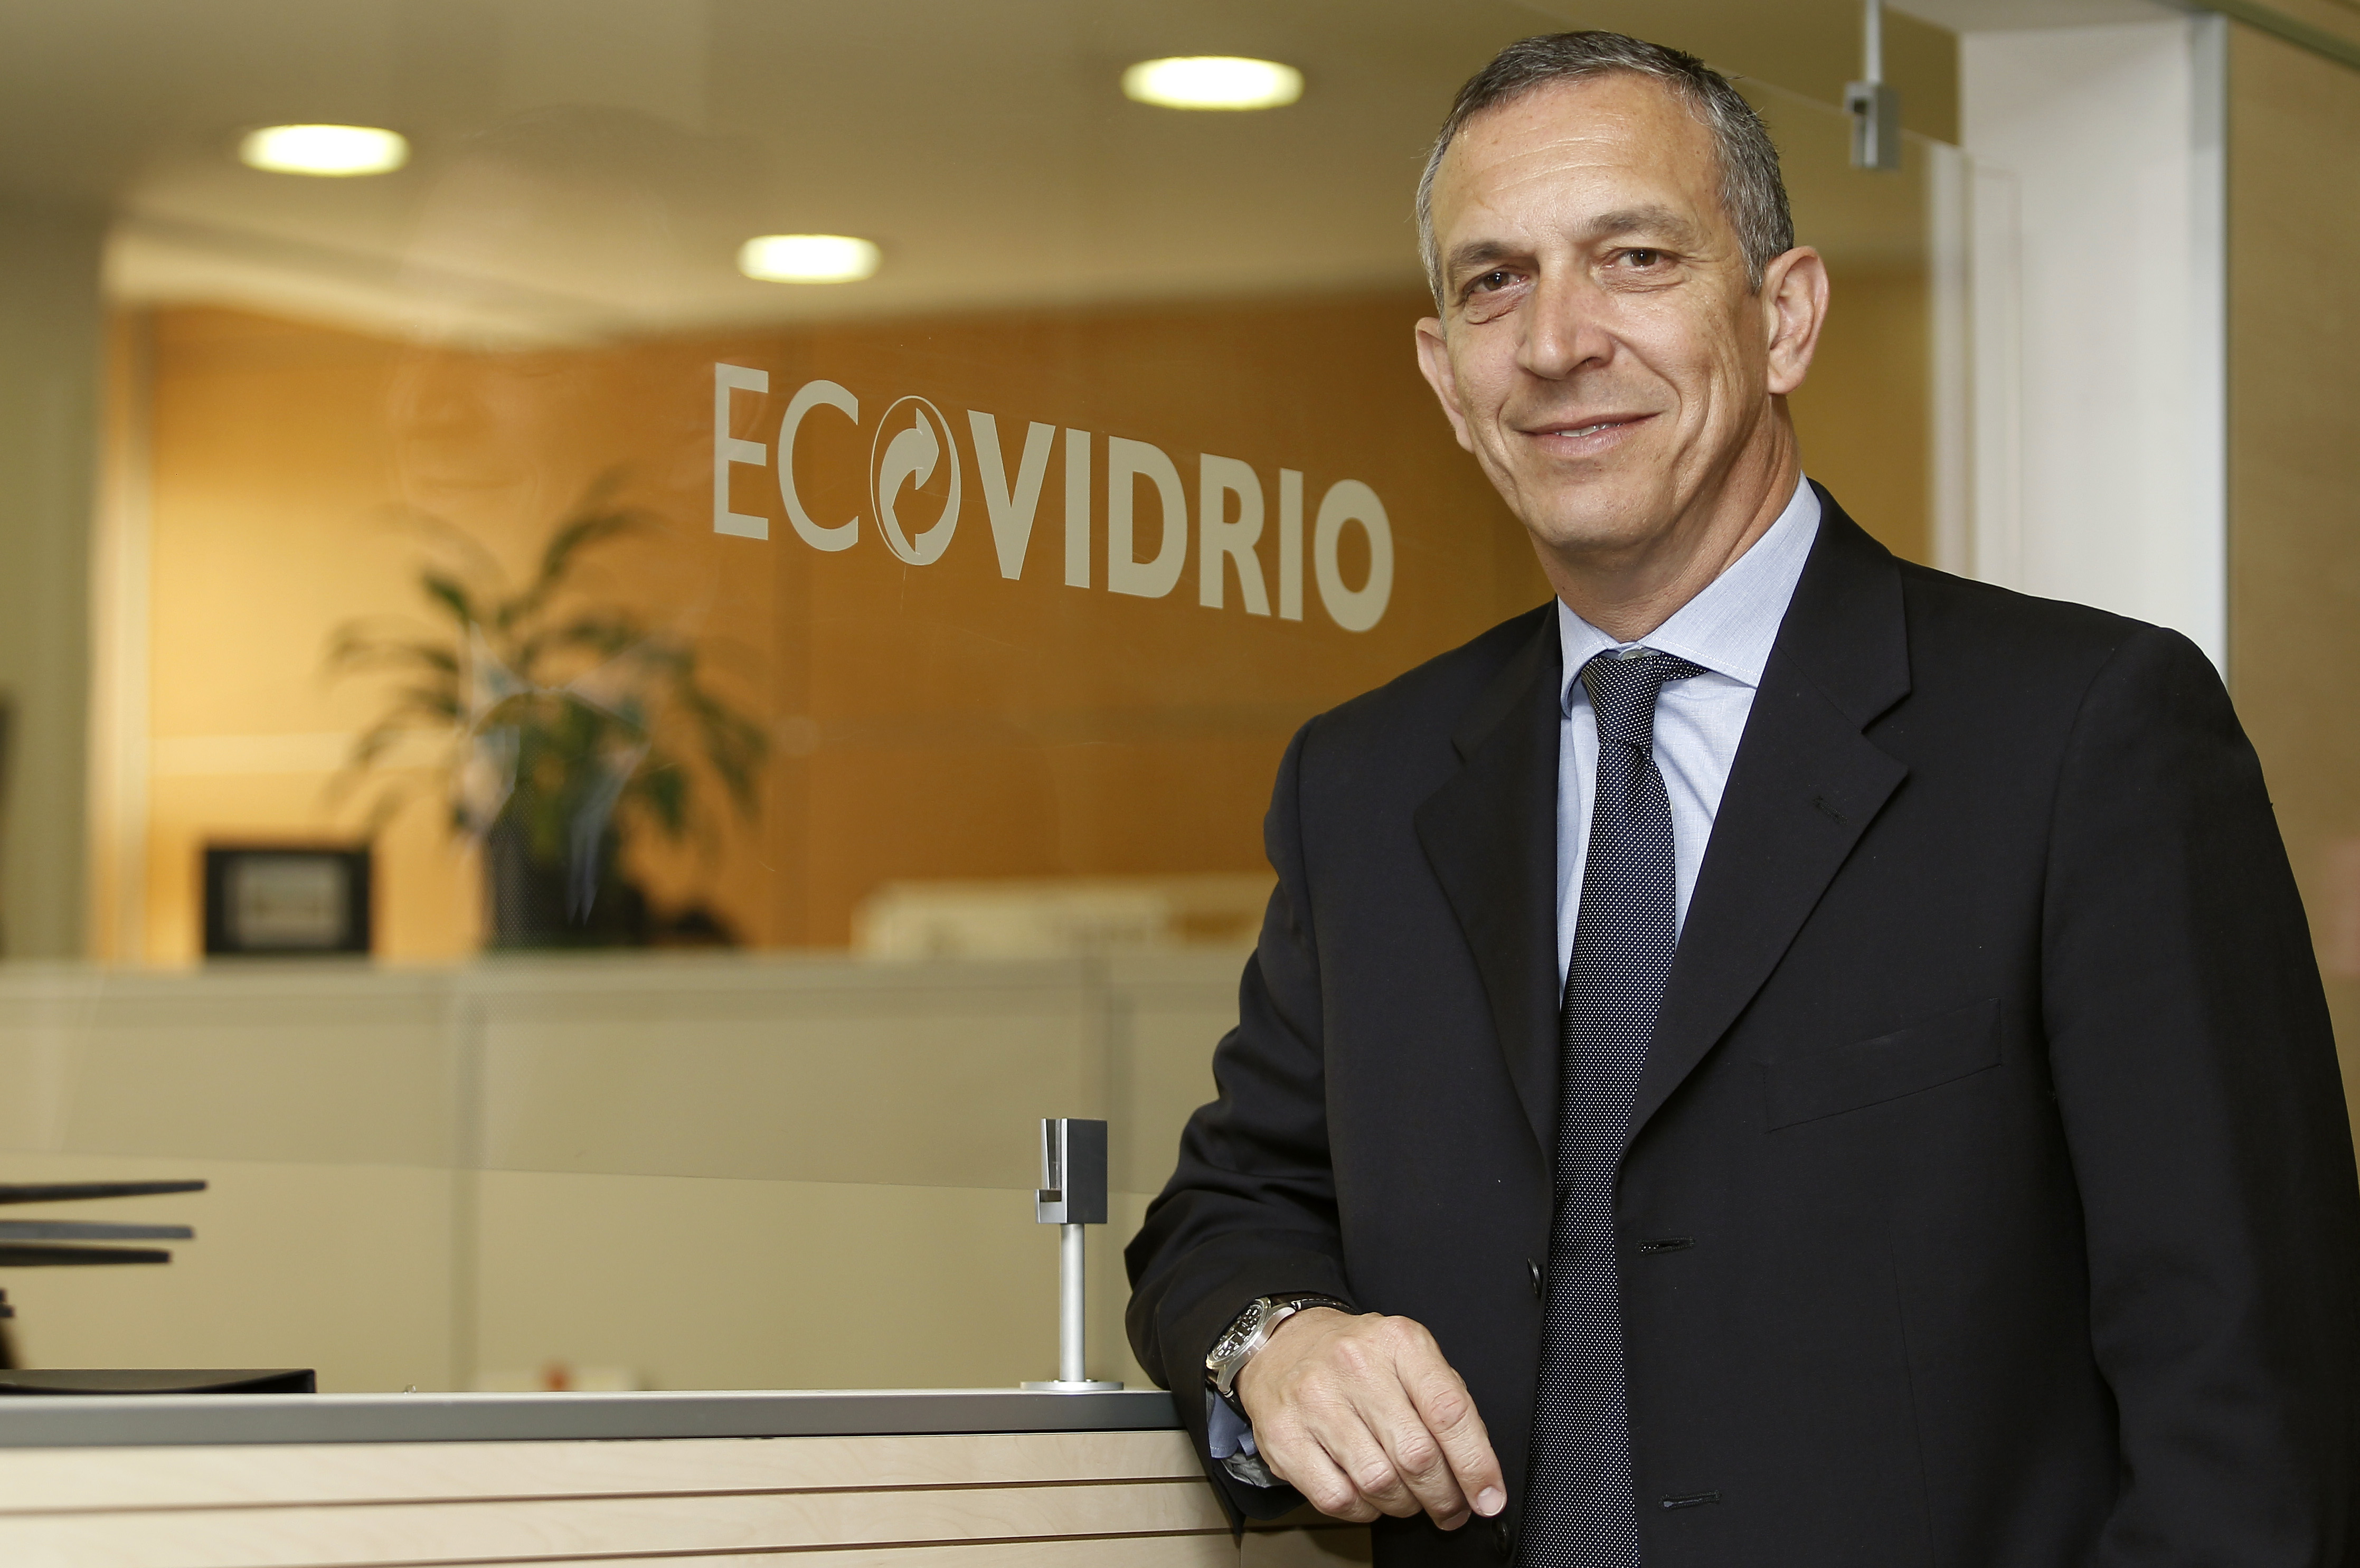 Entrevista a José Manuel Núñez-Lagos, Director General de Ecovidrio